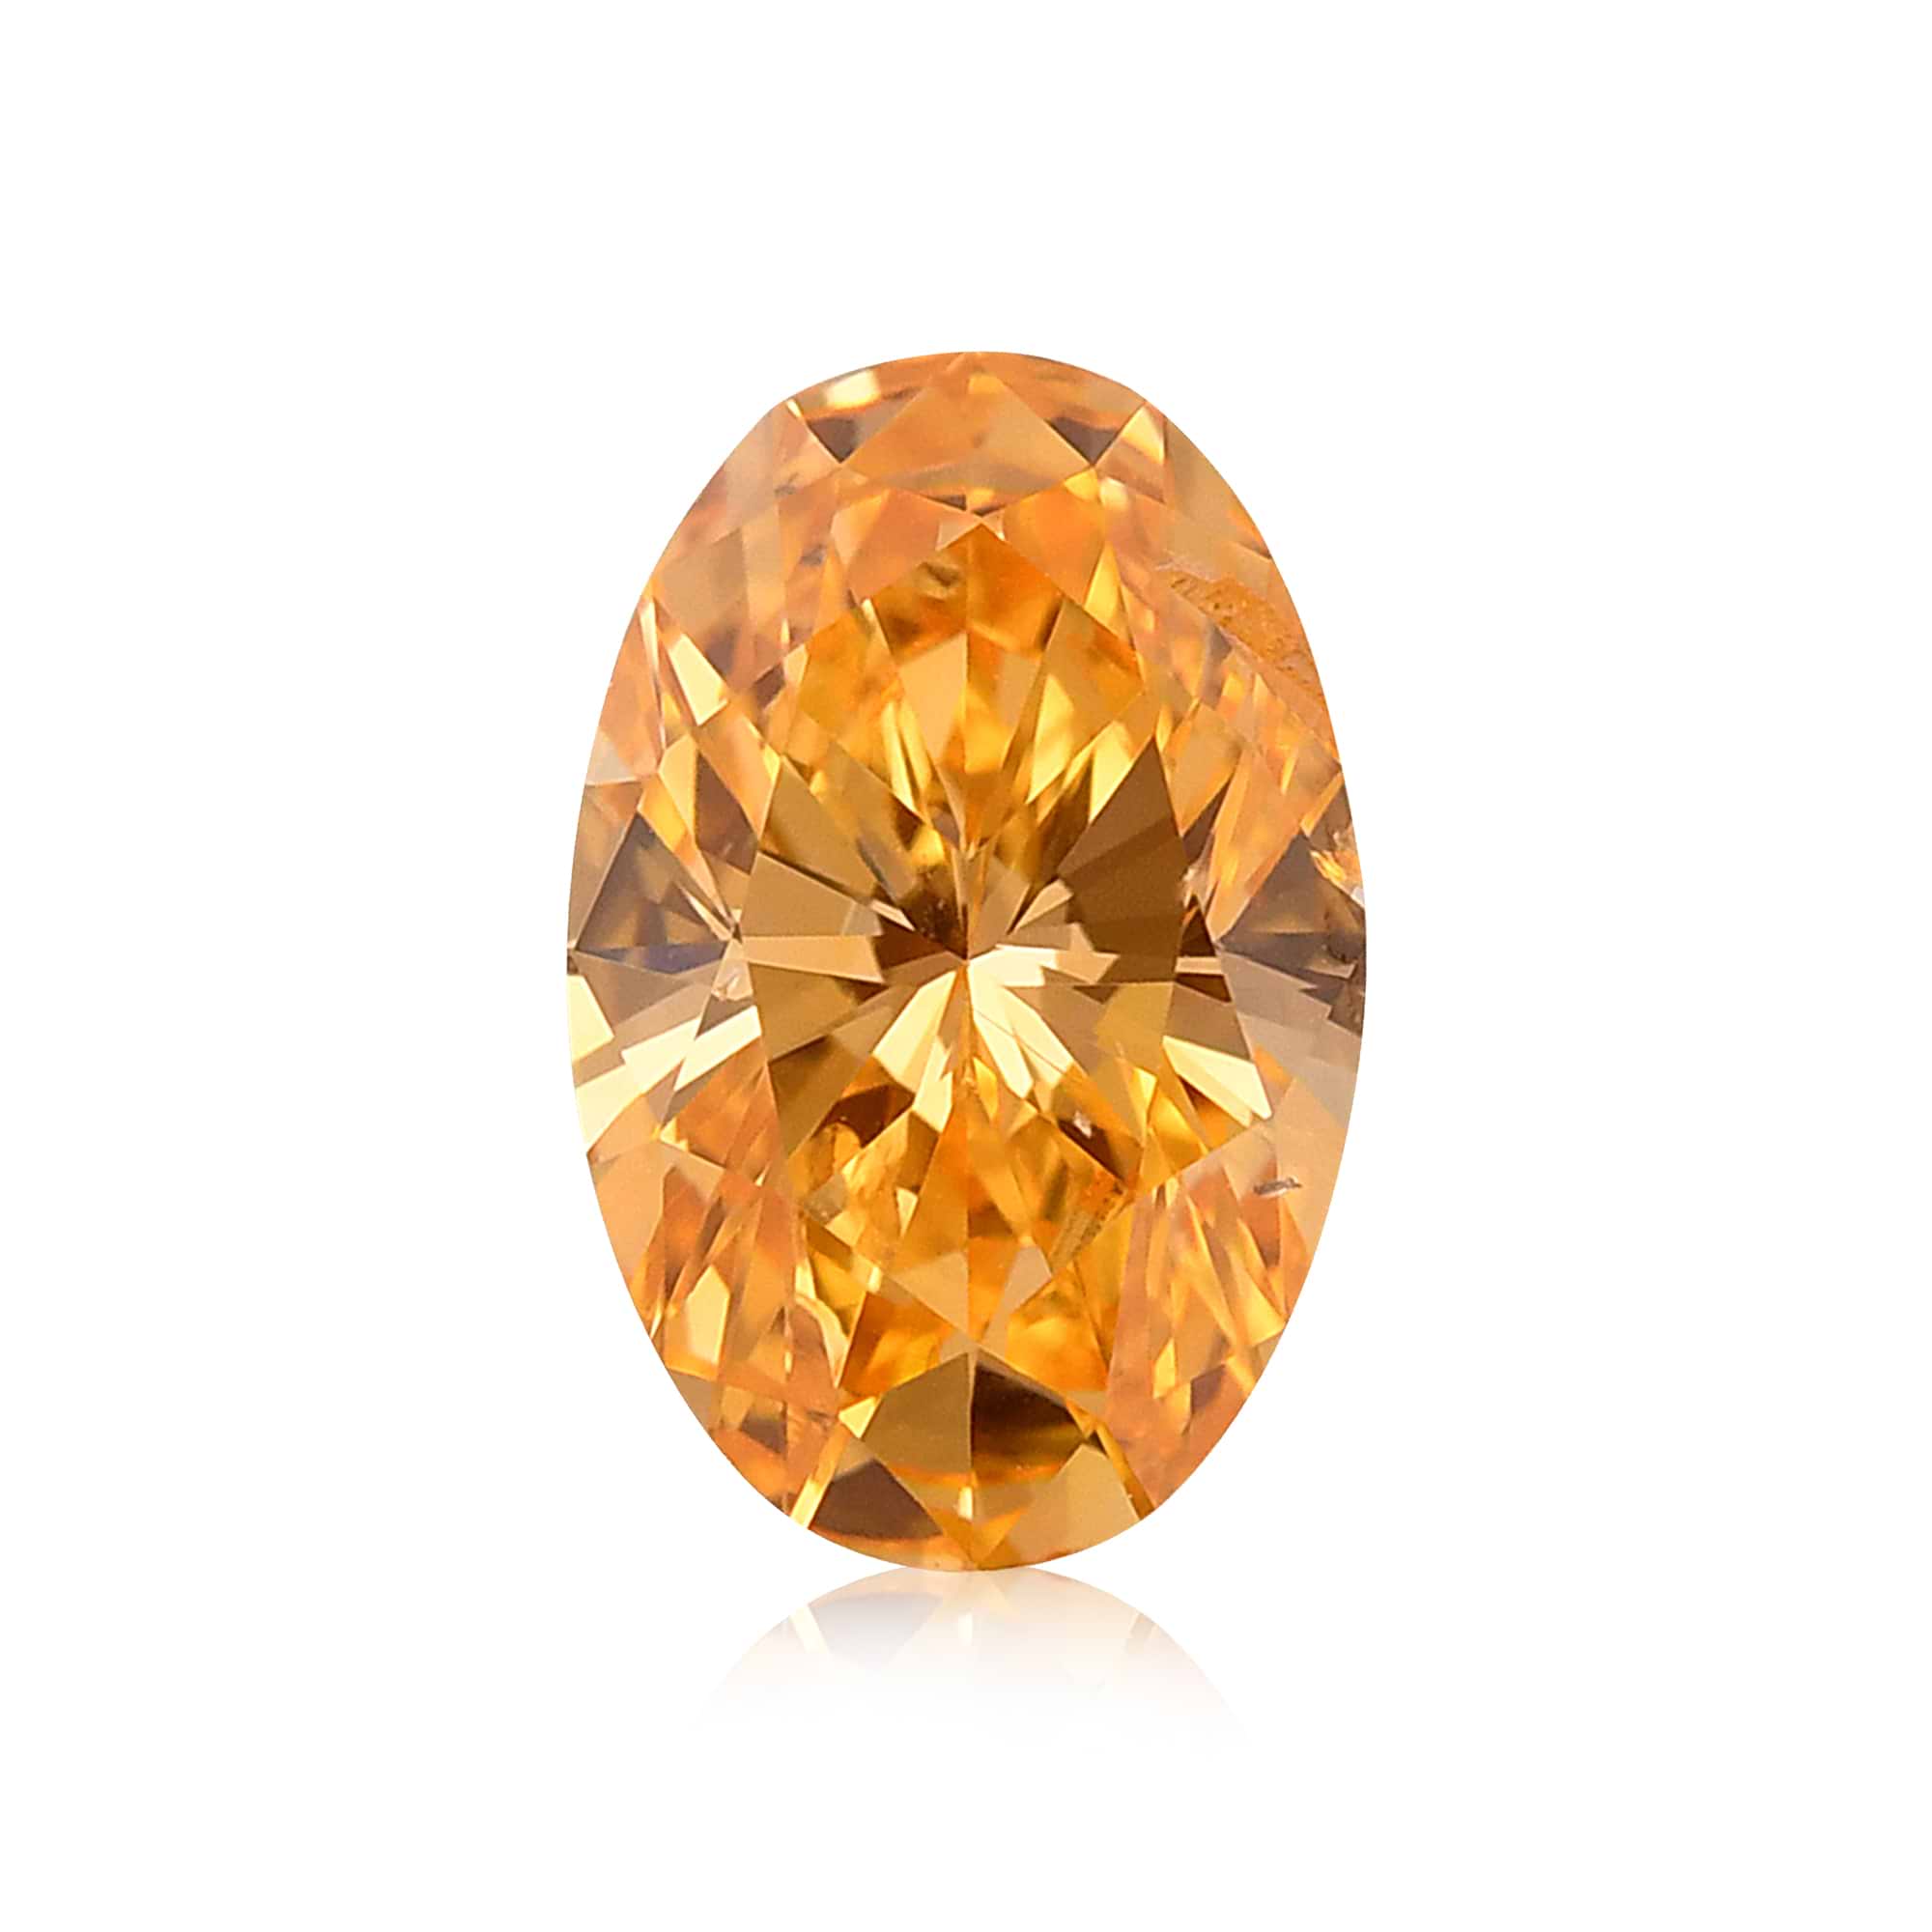 0.74 carat, Fancy Vivid Orange Diamond, Oval Shape, SI2 Clarity, GIA